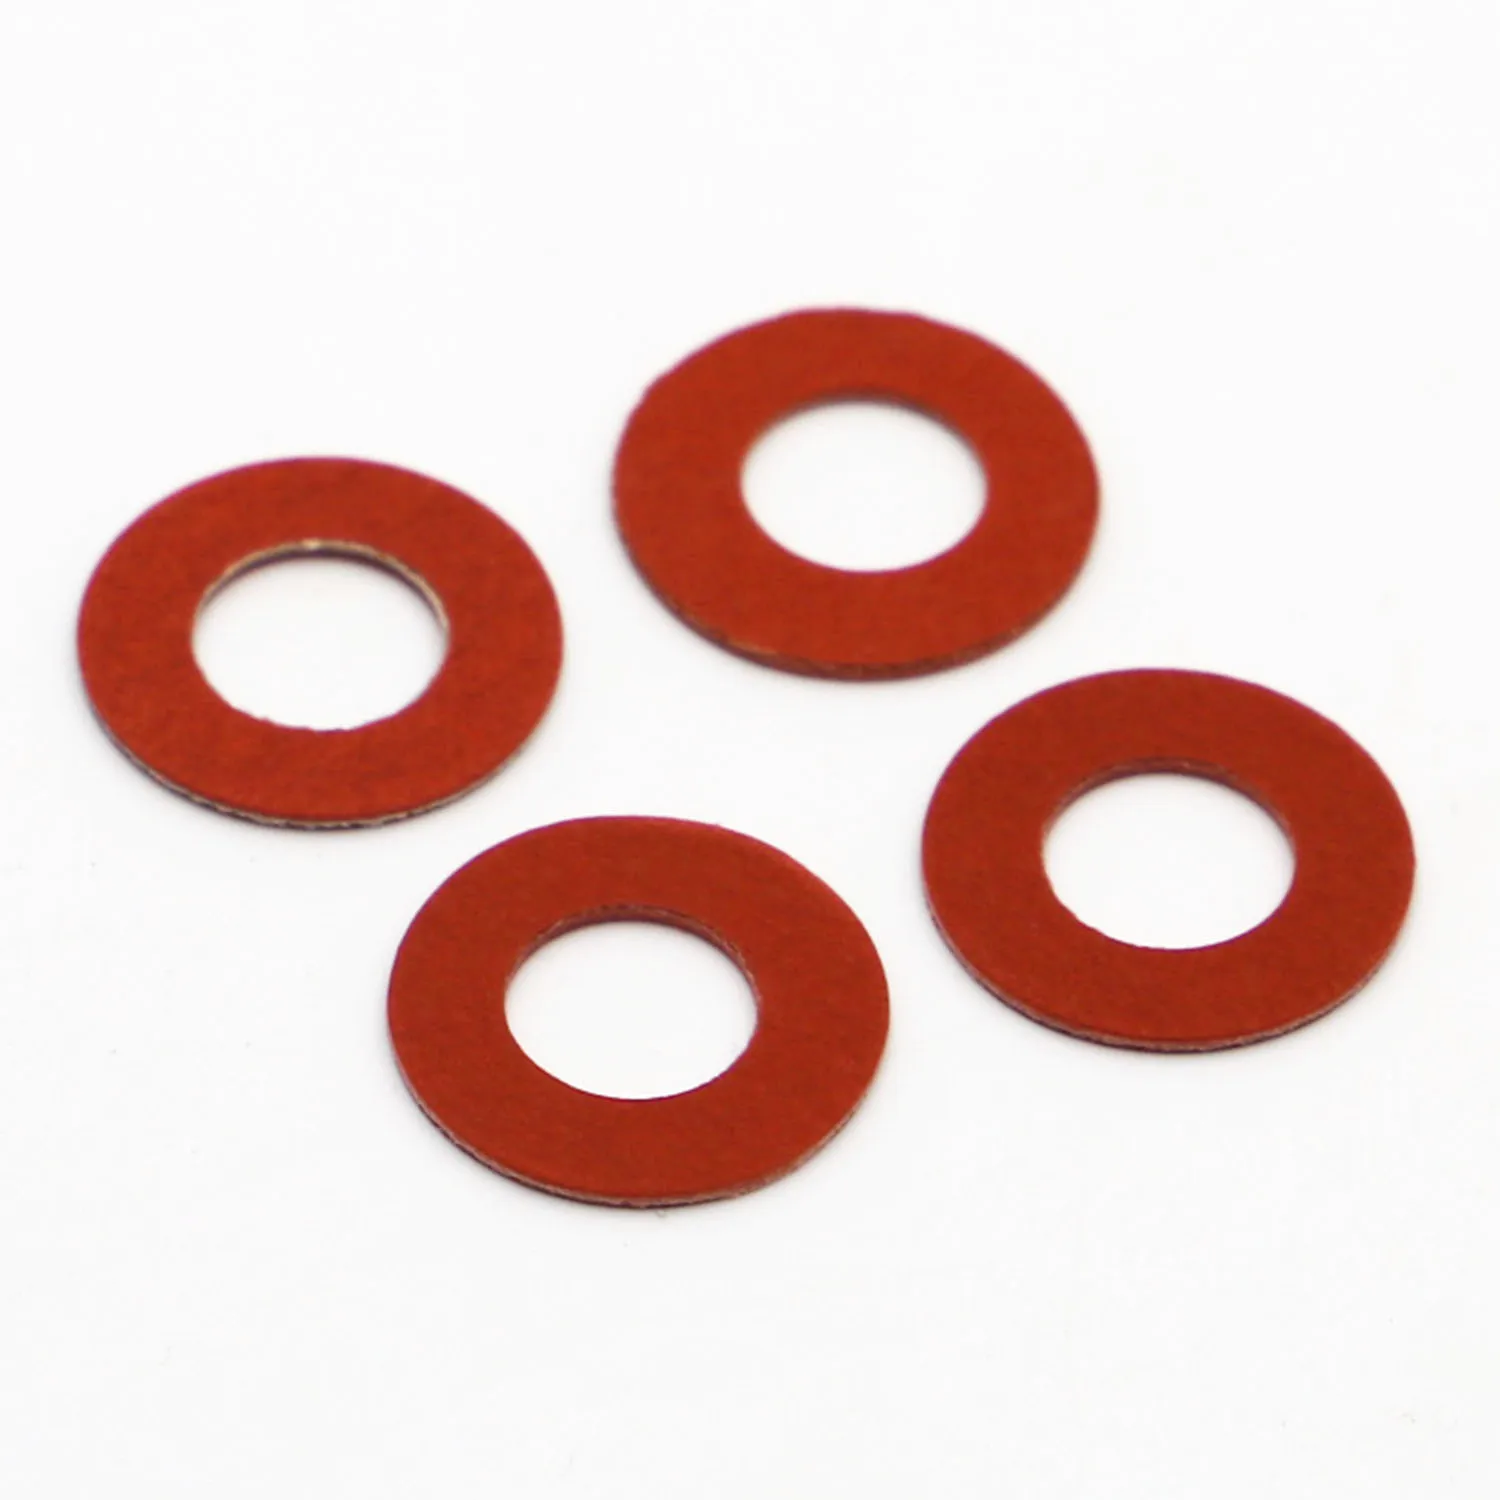 

20-100pcs Red Steel Paper Insulating Flat Washer Insulation Plain Gasket Pad Ring Spacer M2 M2.5 M3 M4 M5 M6 M8 M10 M12 M14 M16